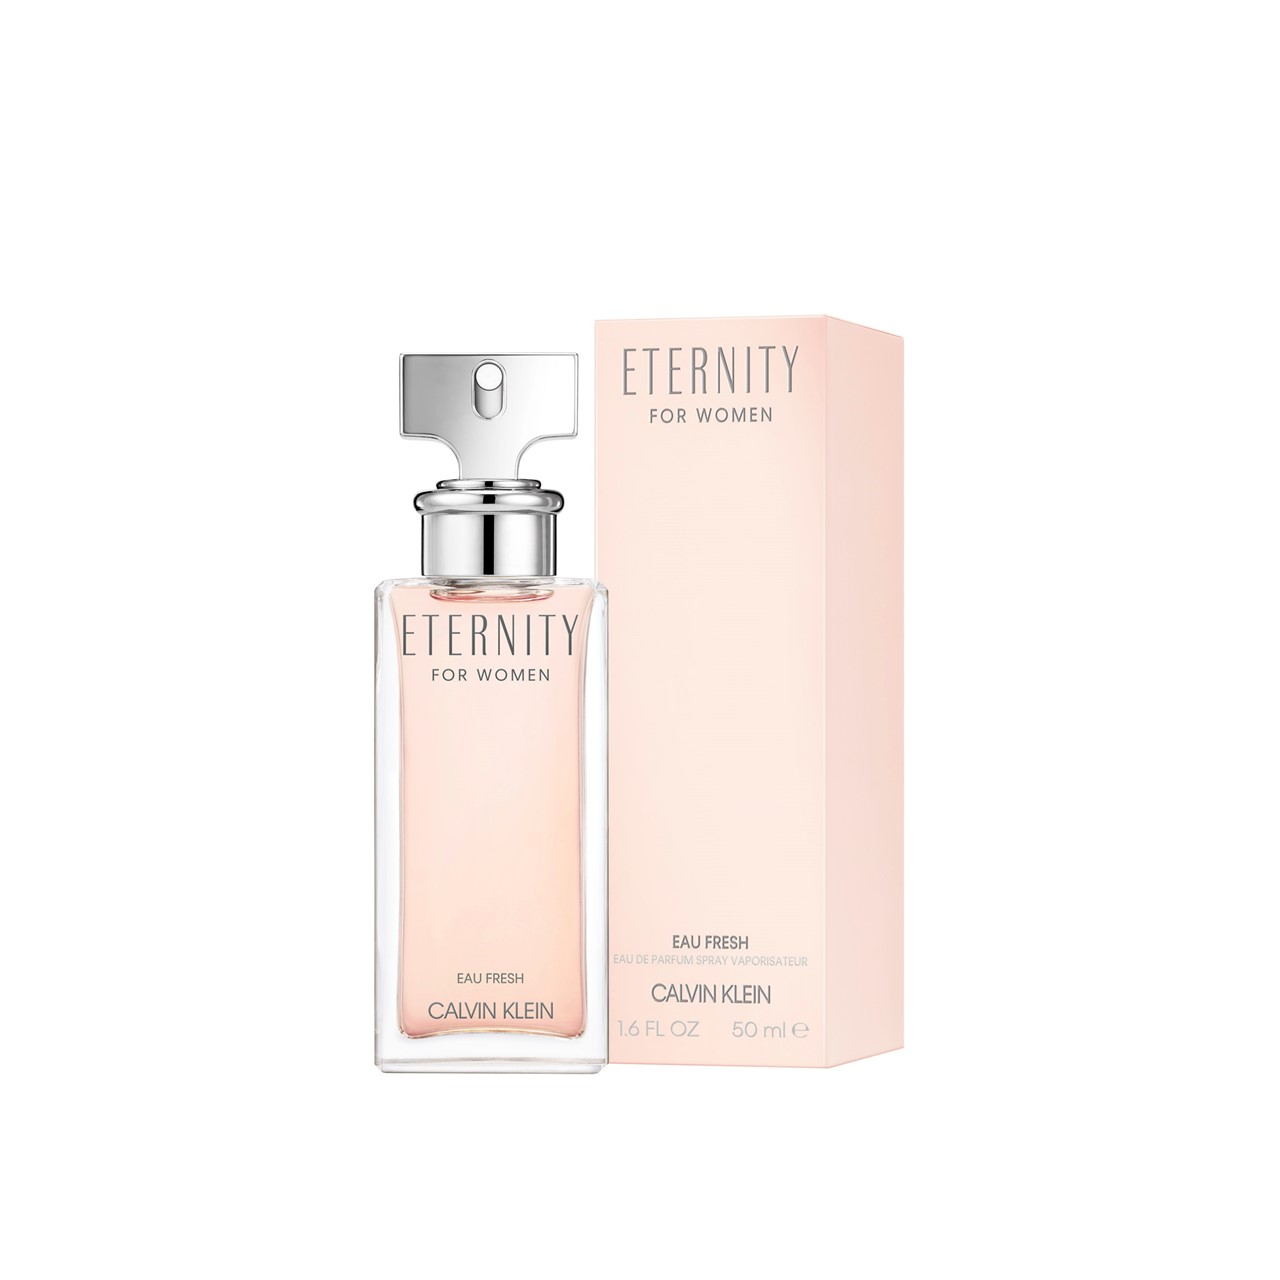 Buy Calvin Eau Women de · For Eternity Parfum USA Klein Fresh Eau